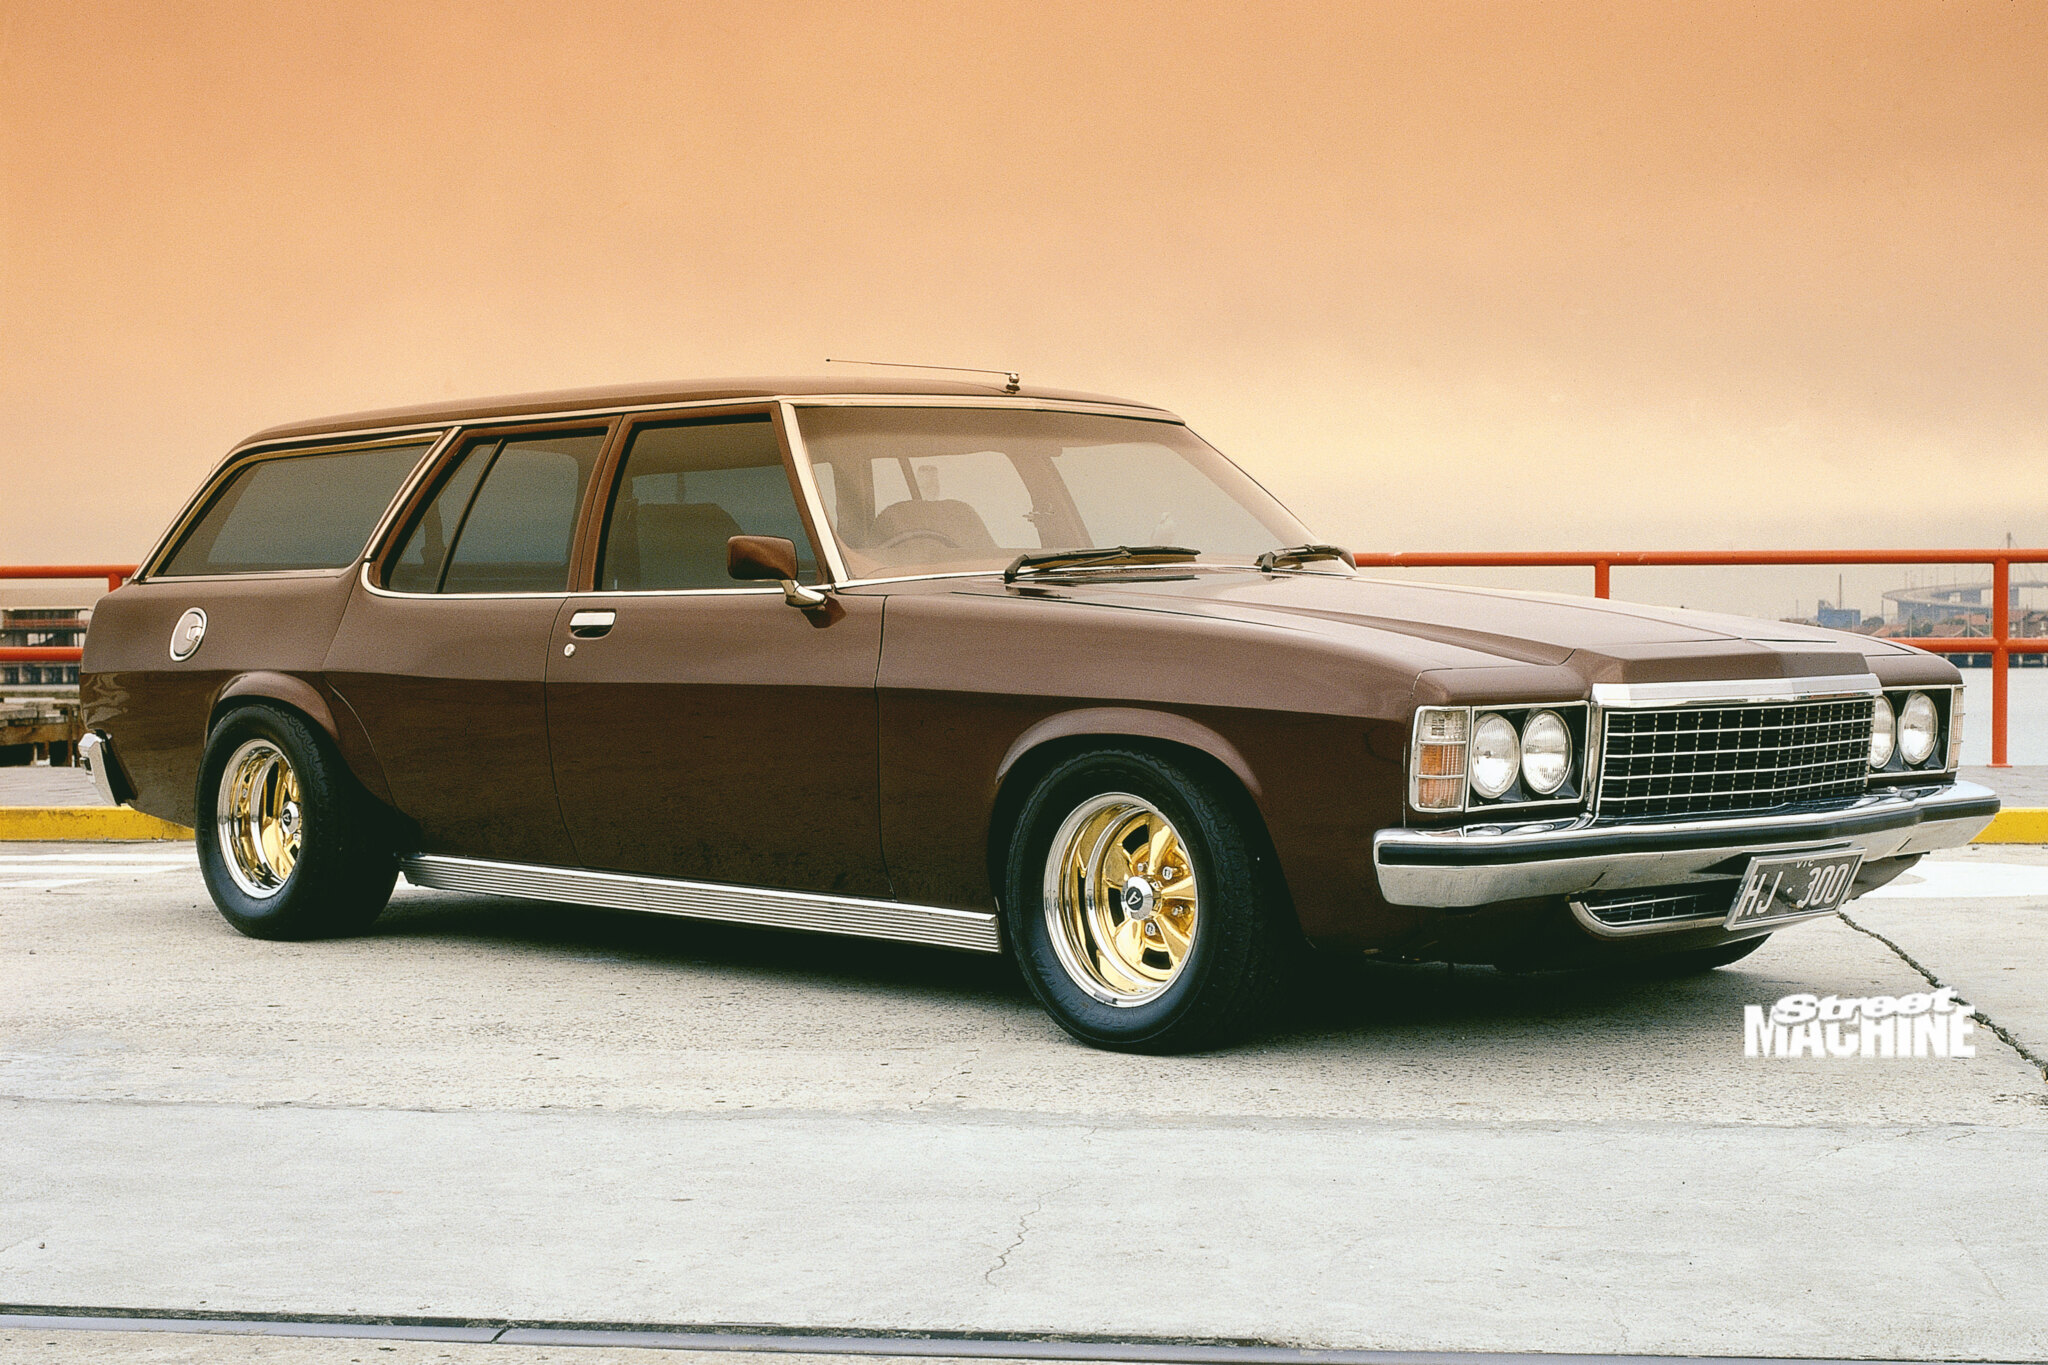 The Beast: HJ Holden Premier wagon